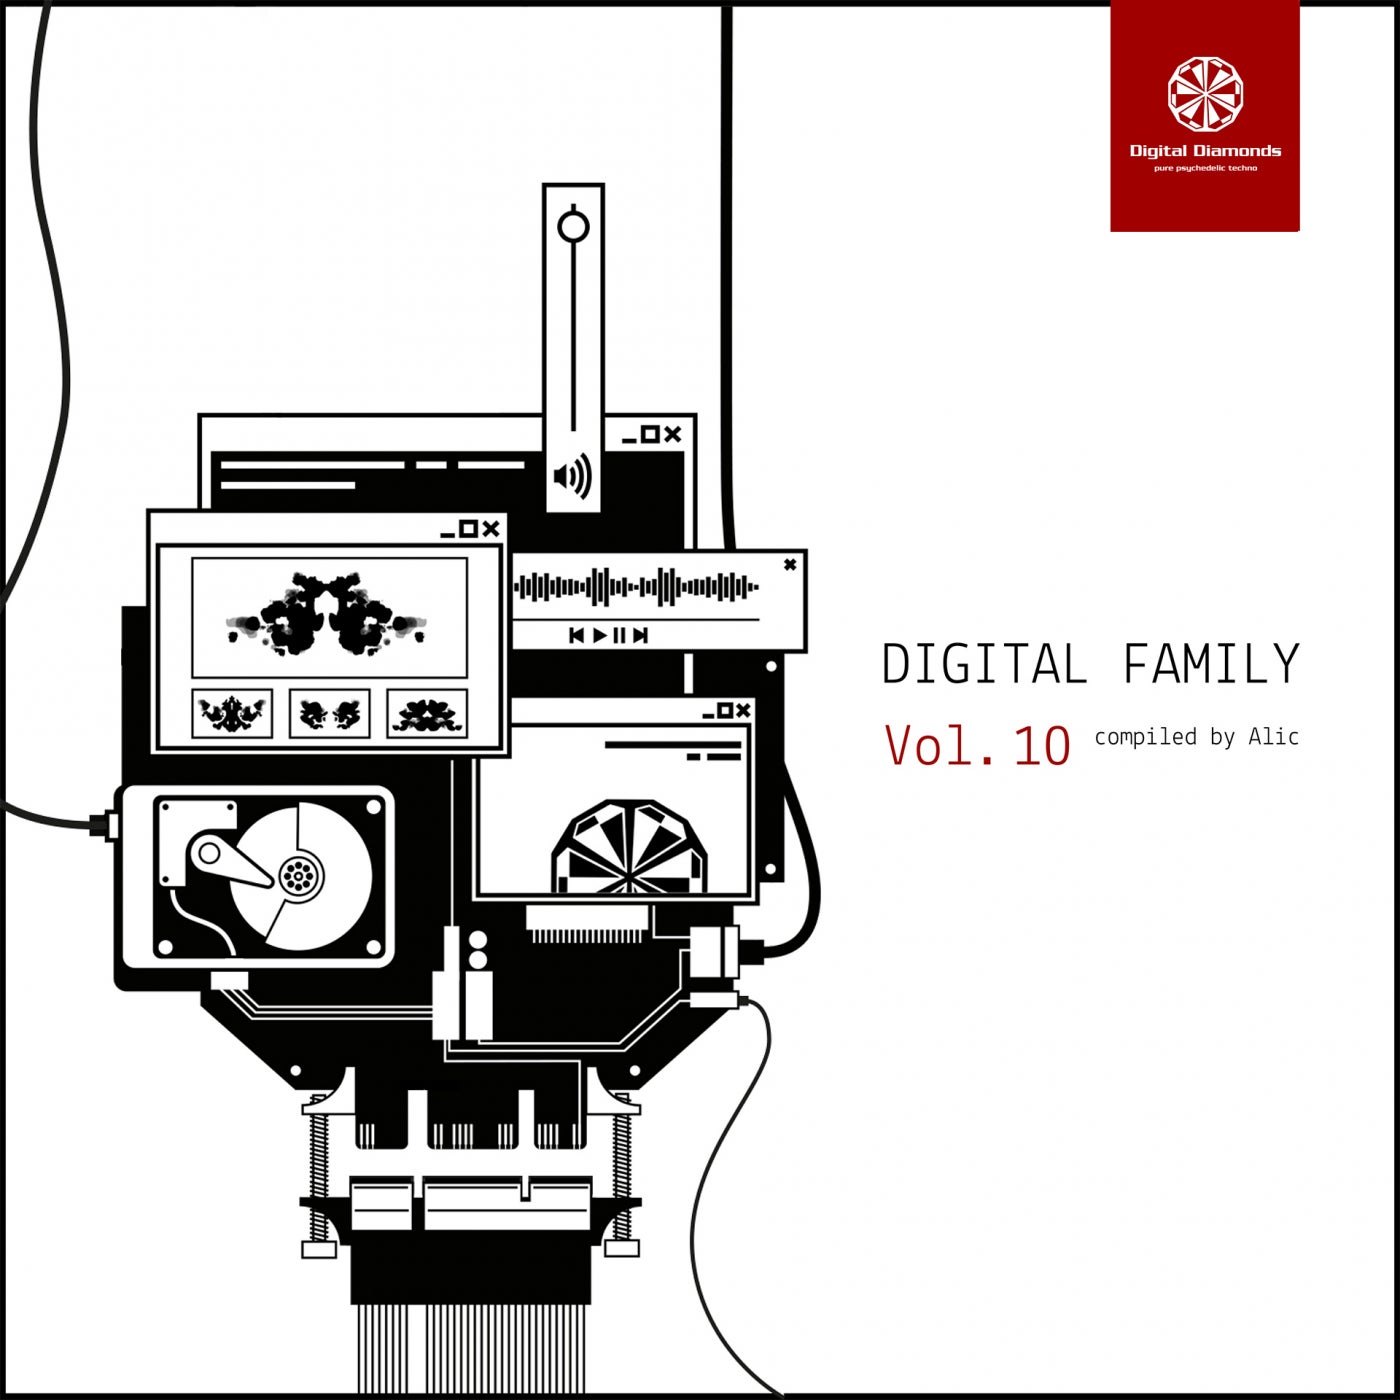 Digital Family Vol. 10